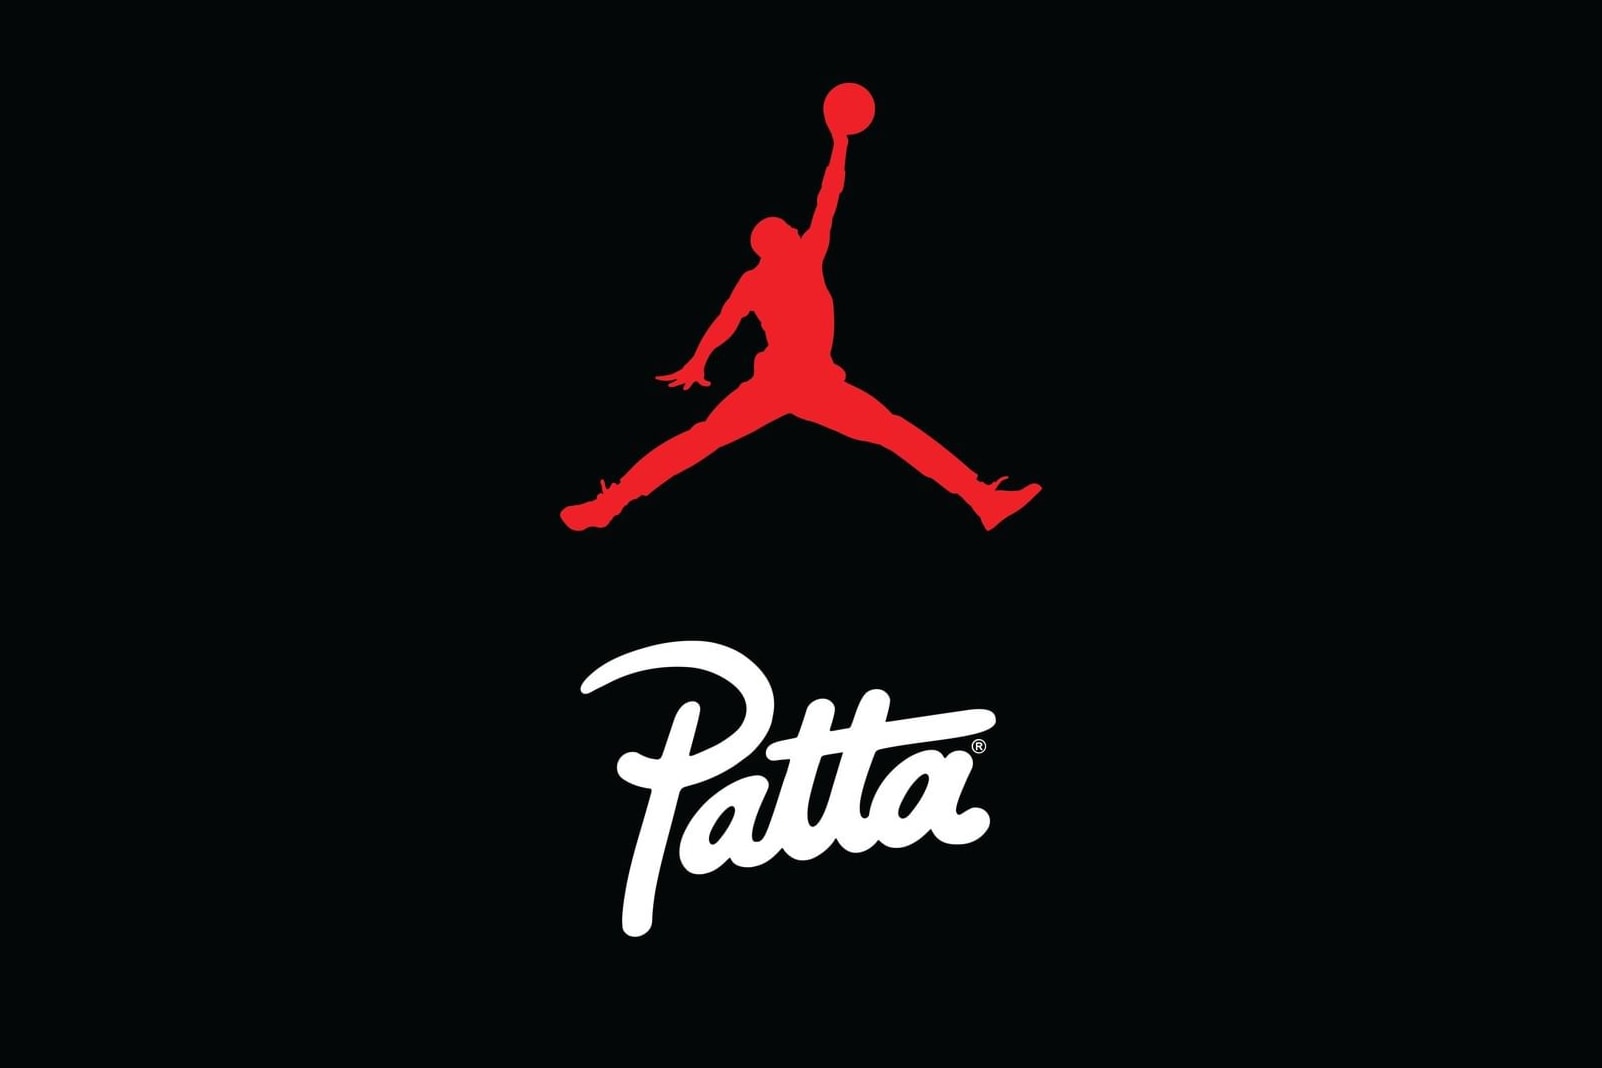 Patta 宣佈將與 Jordan Brand 展開全新聯名企劃